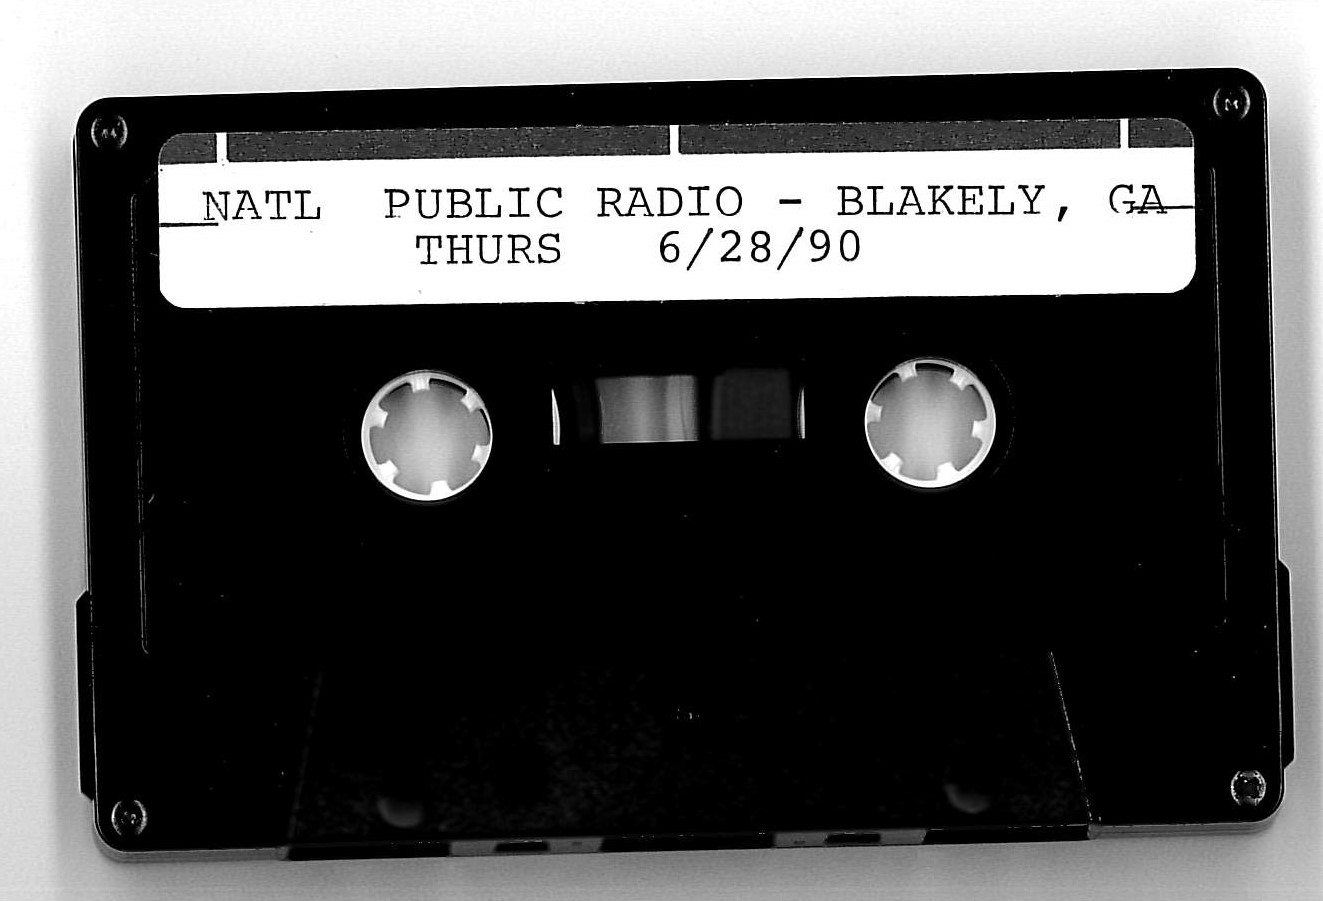 National Public Radio (NPR) - Blakely, Georgia, June 28, 1990.